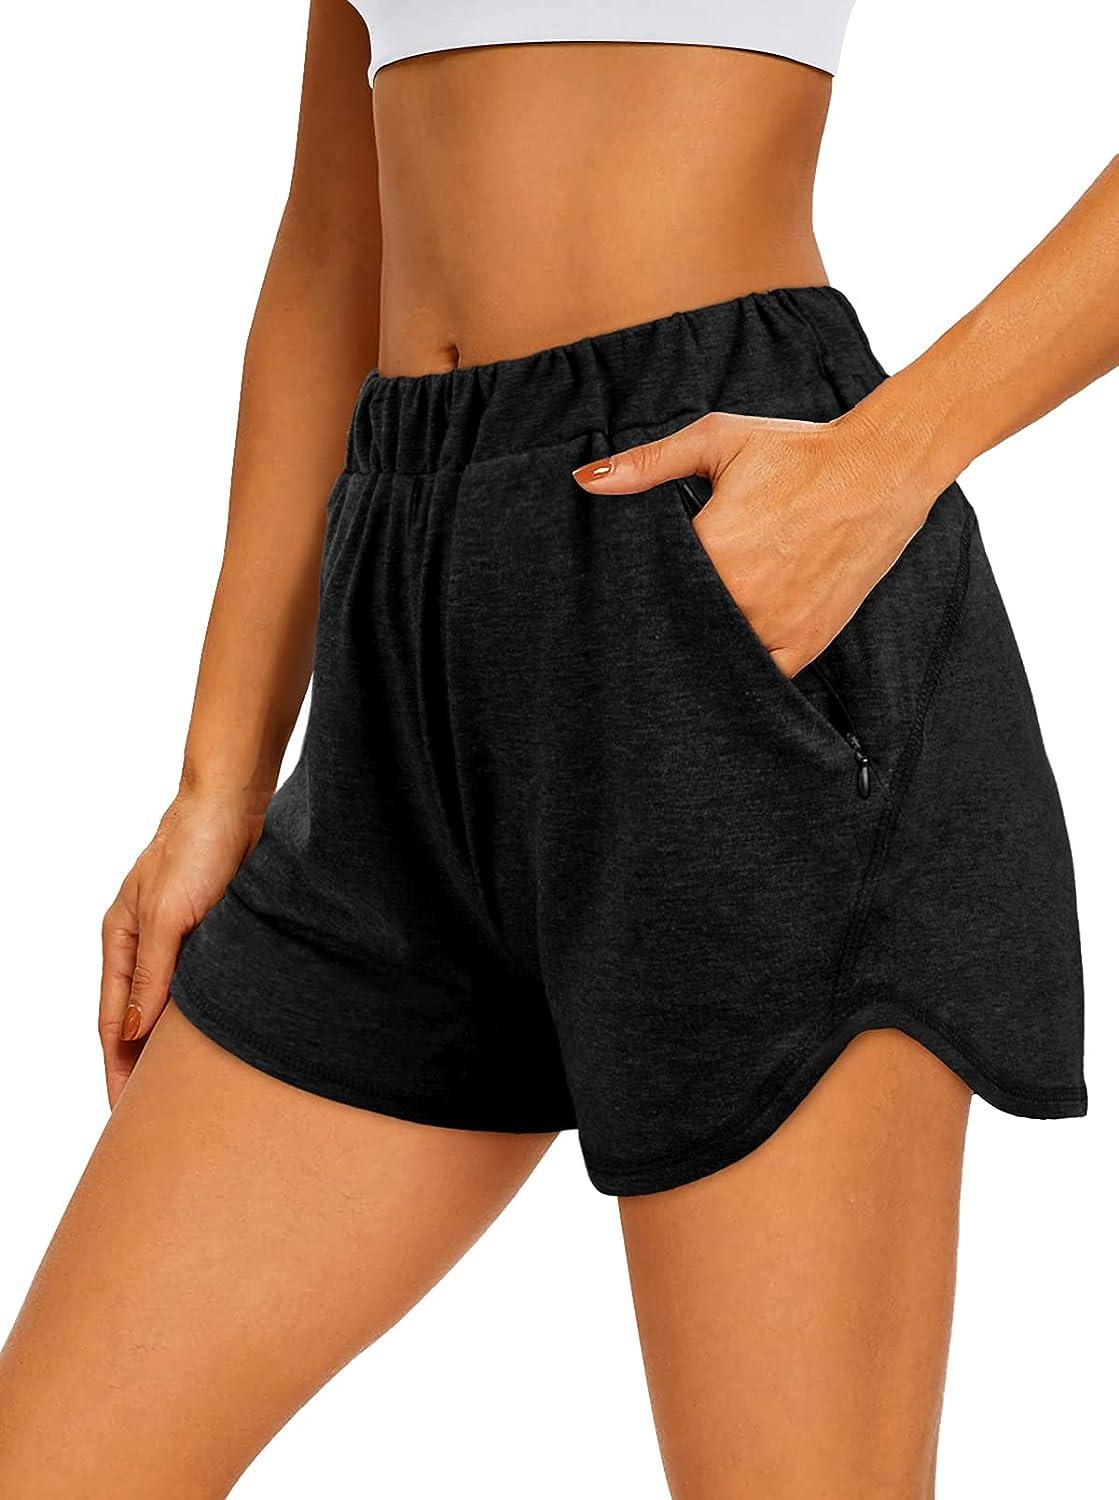 Dolphin Shorts for Women Elastic Waist Yoga Shorts Dance Slim Hot Pants  Summer Running Athletic Shorts at  Women's Clothing store